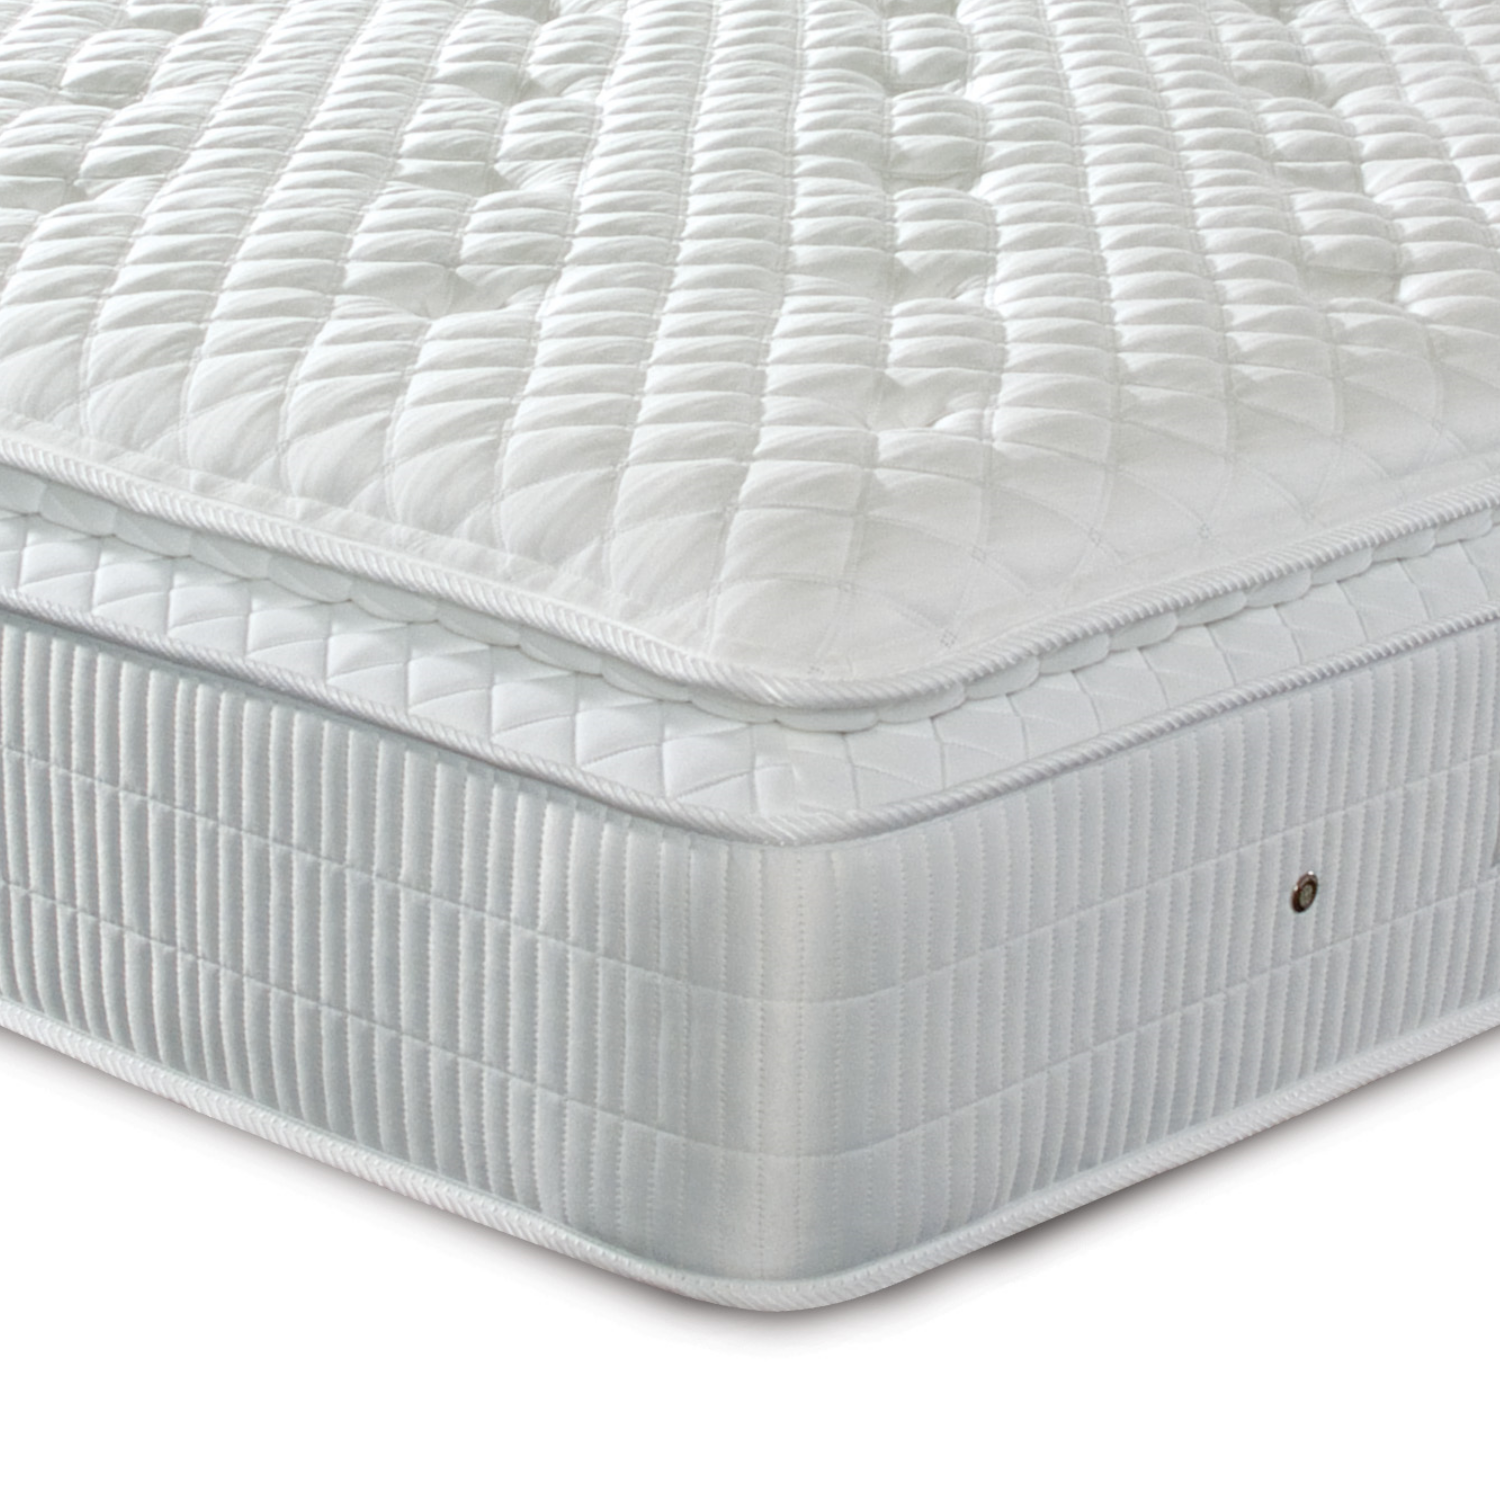 Photo of Sleepeezee cooler pinnacle 1800 pocket sprung mattress with gel top - single